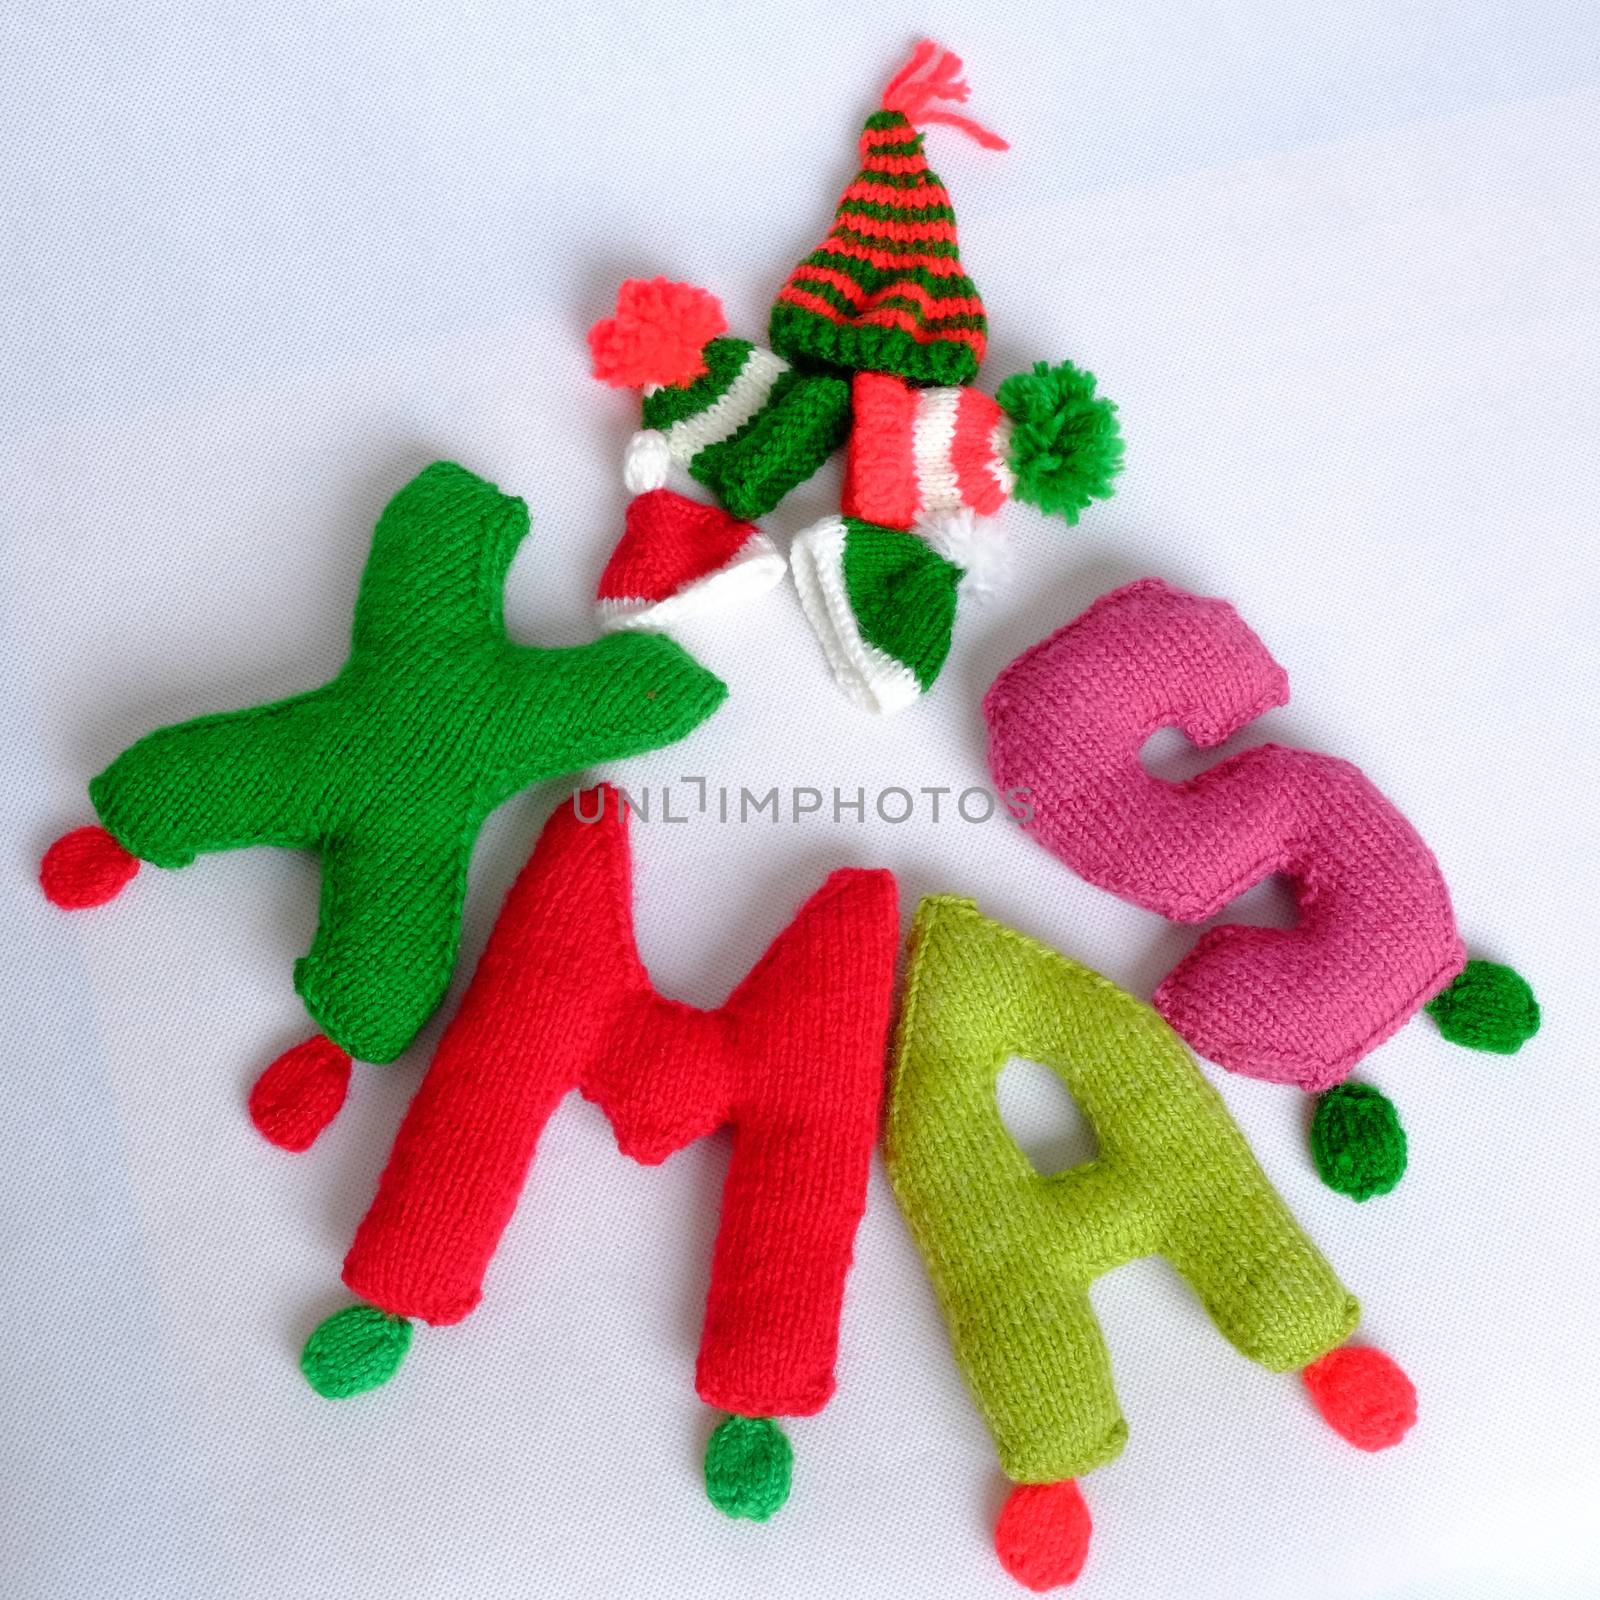 Christmas, Xmas alphabet, handmade, knitted, noel gift by xuanhuongho